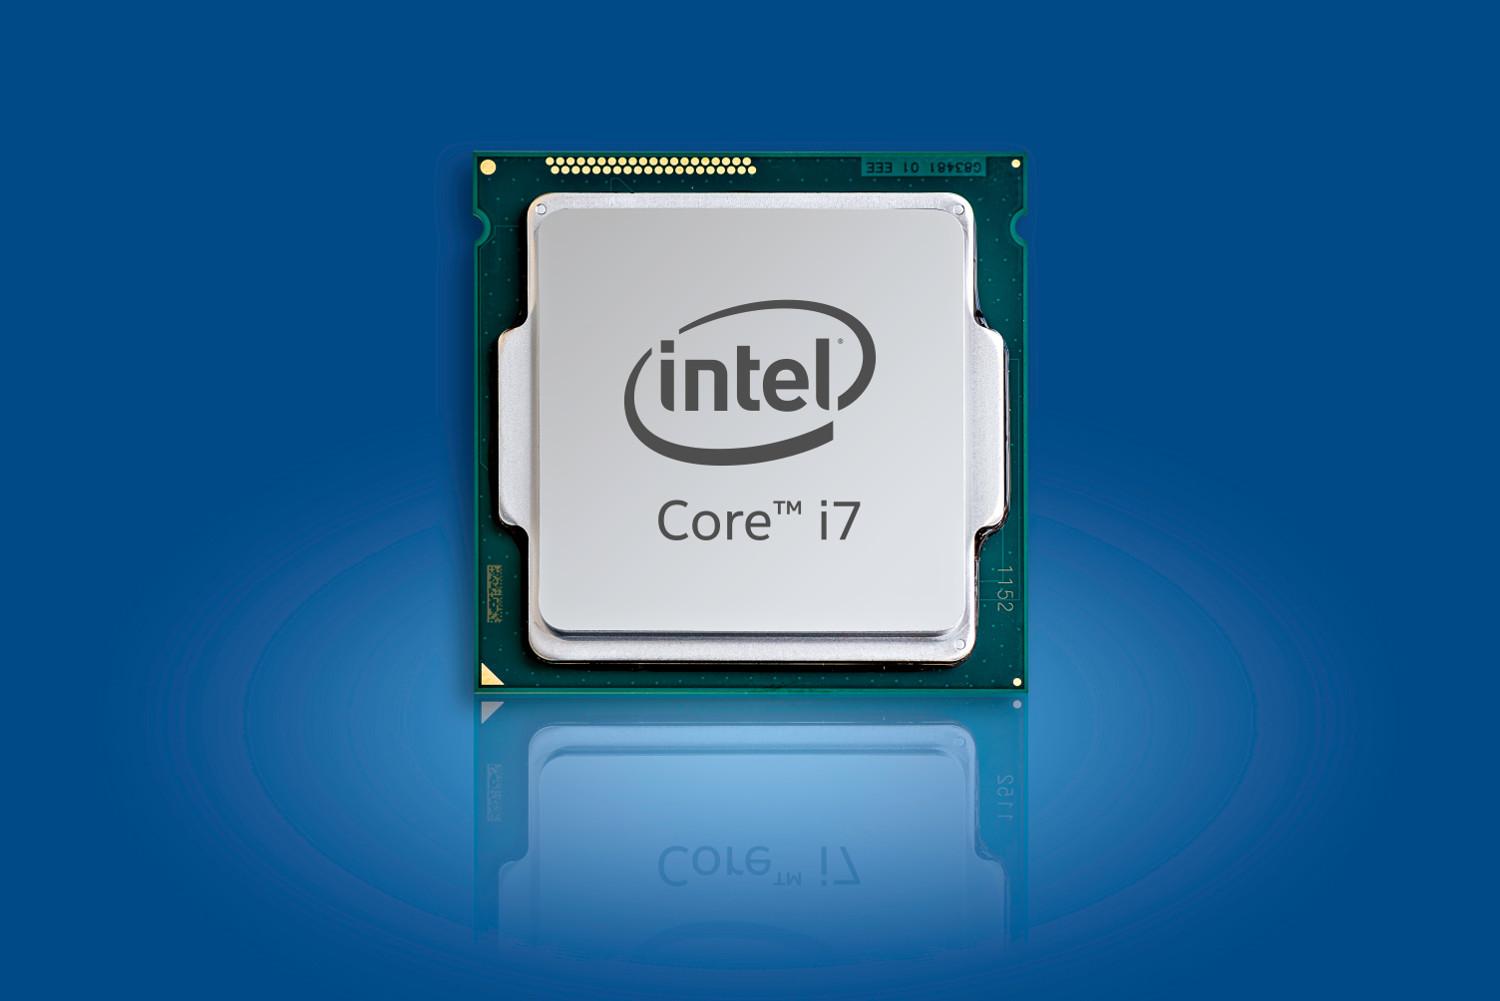 Intel sde. Процессор Intel Core i7-9700k. Intel Core i7-10700f lga1200, 8 x 2900 МГЦ. Процессор Intel Core i7 10700. Процессор Intel Core i7-8700k.